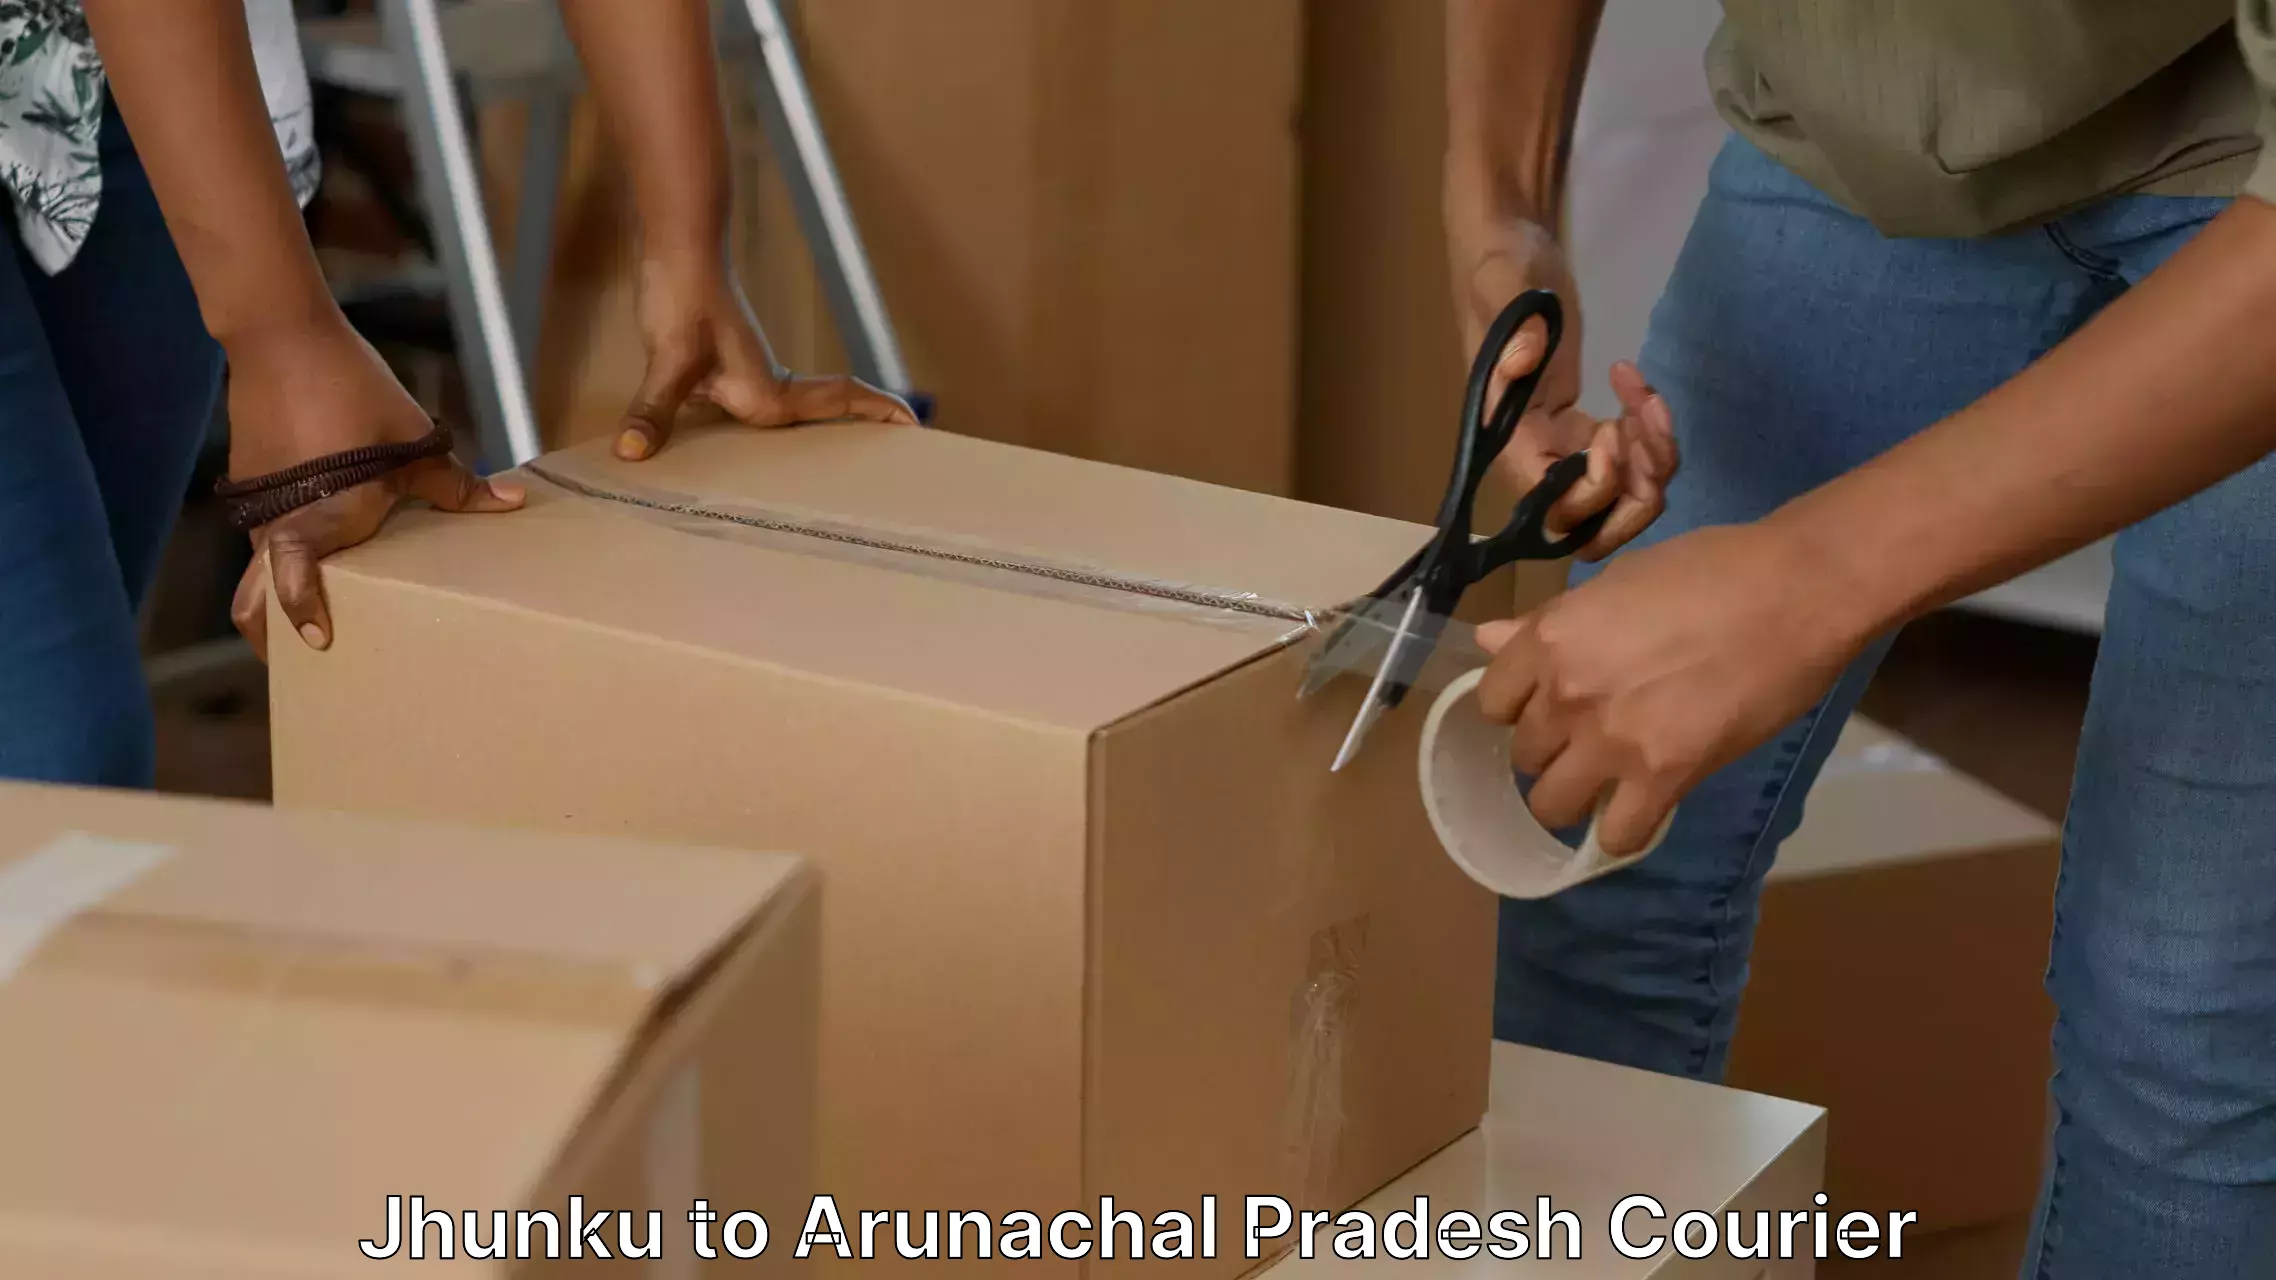 Skilled furniture movers Jhunku to Sagalee